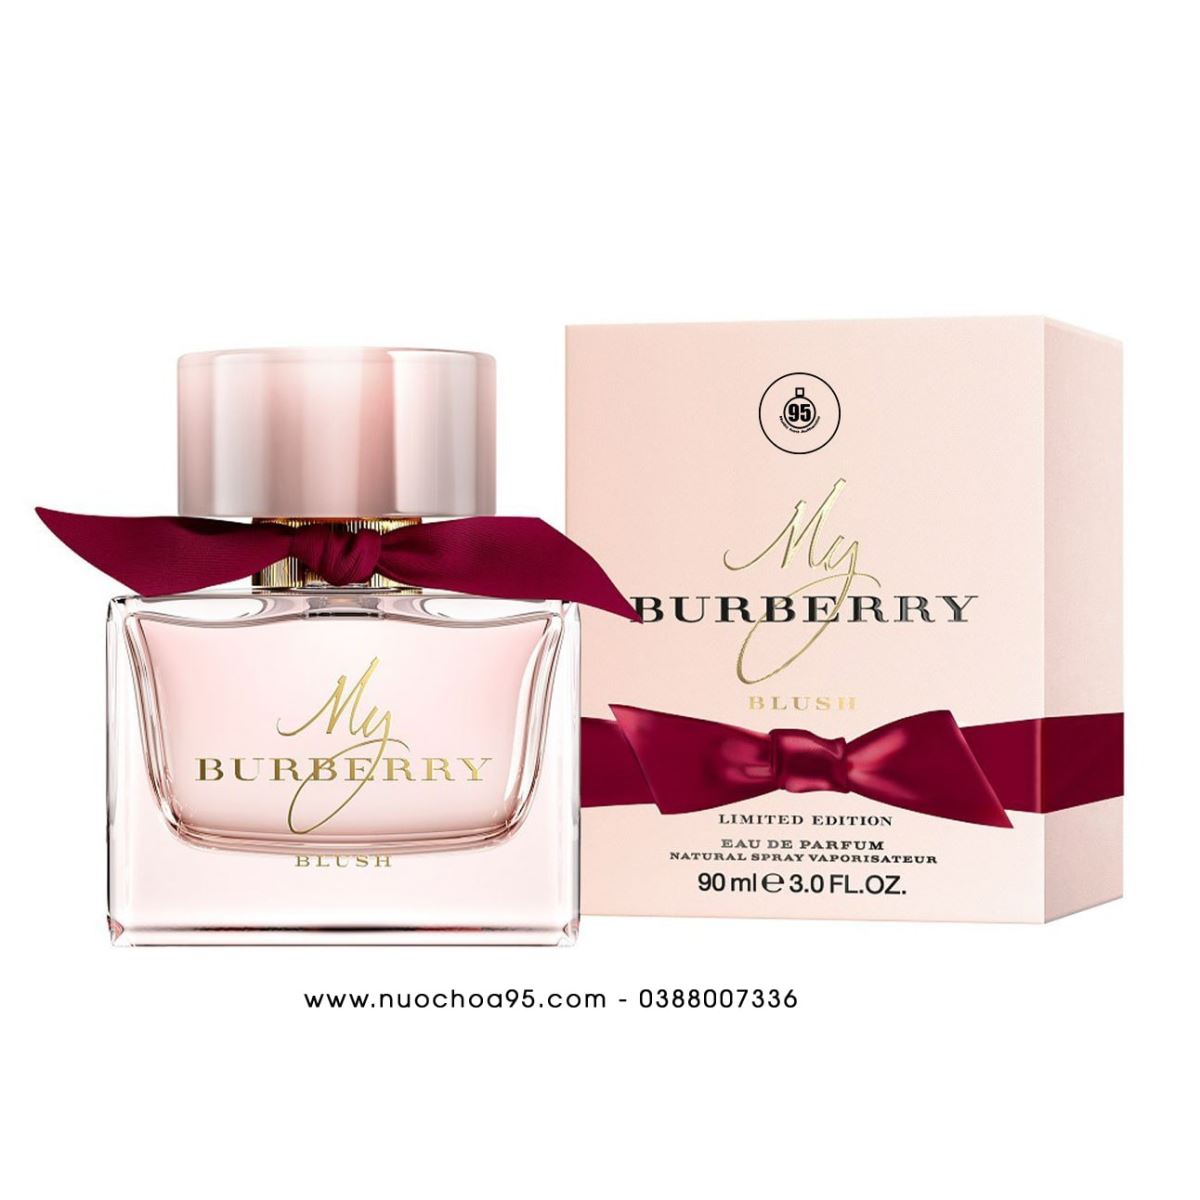 Nước hoa My Burberry Blush Edp Limited Edition 90ml | mifashop